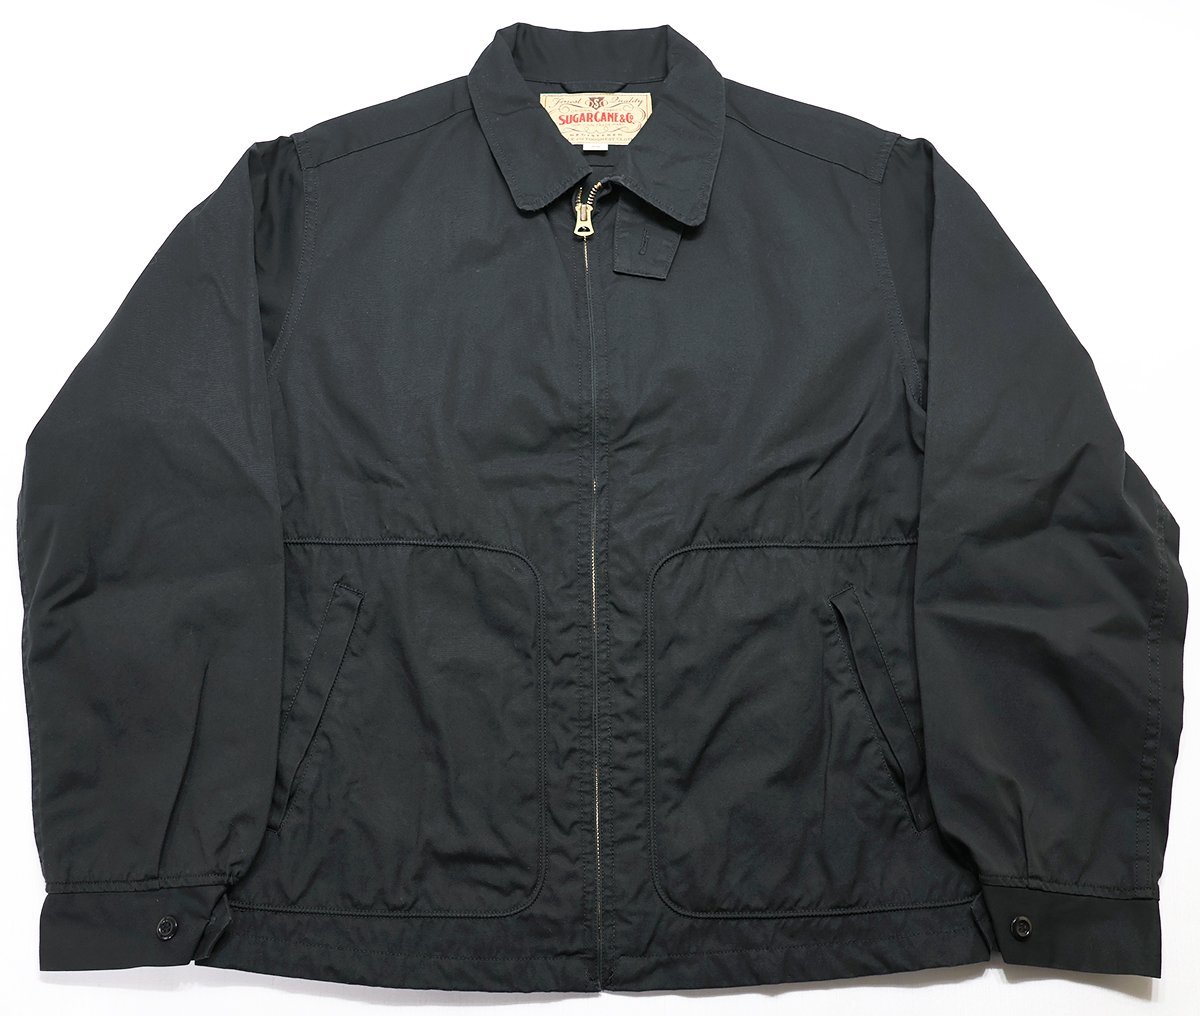 SugarCane (シュガーケーン) Cotton Weather Cloth Sports Jacket